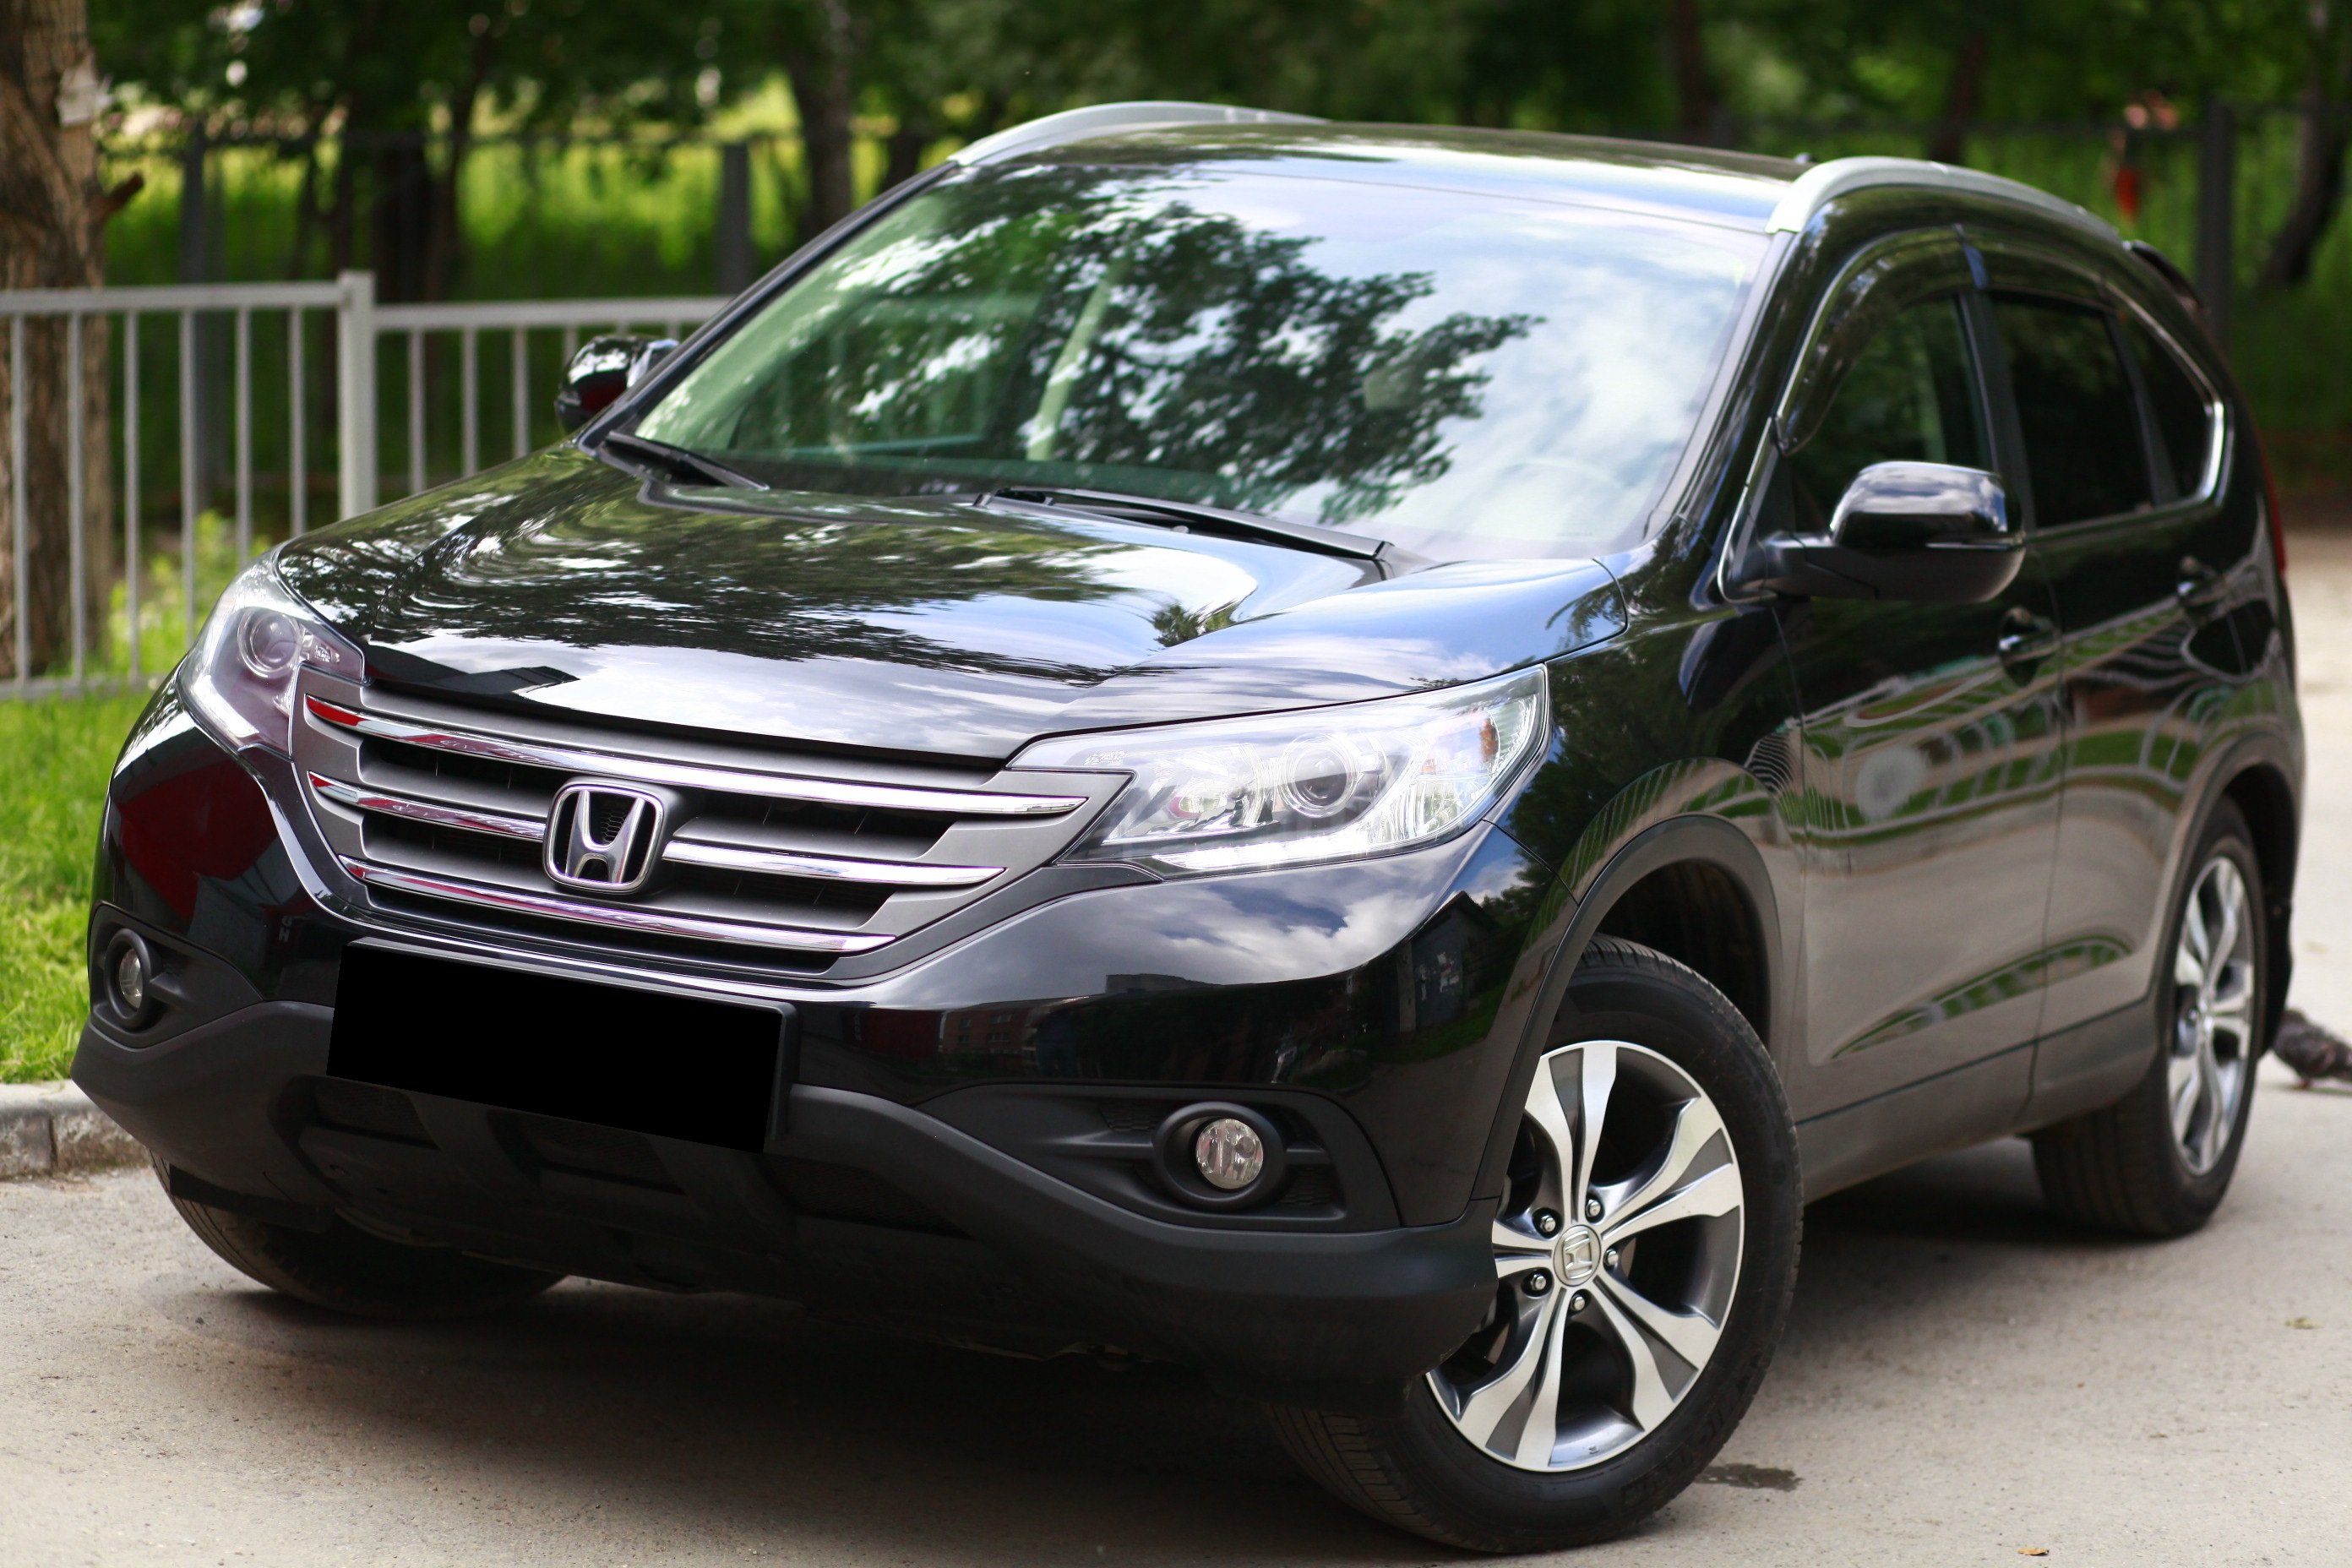 Автомобили хонда срв с пробегом. Honda CR-V 2013. Honda CRV 2013 черная. Honda CRV 2013 2.4. Honda CRV 4 2013.